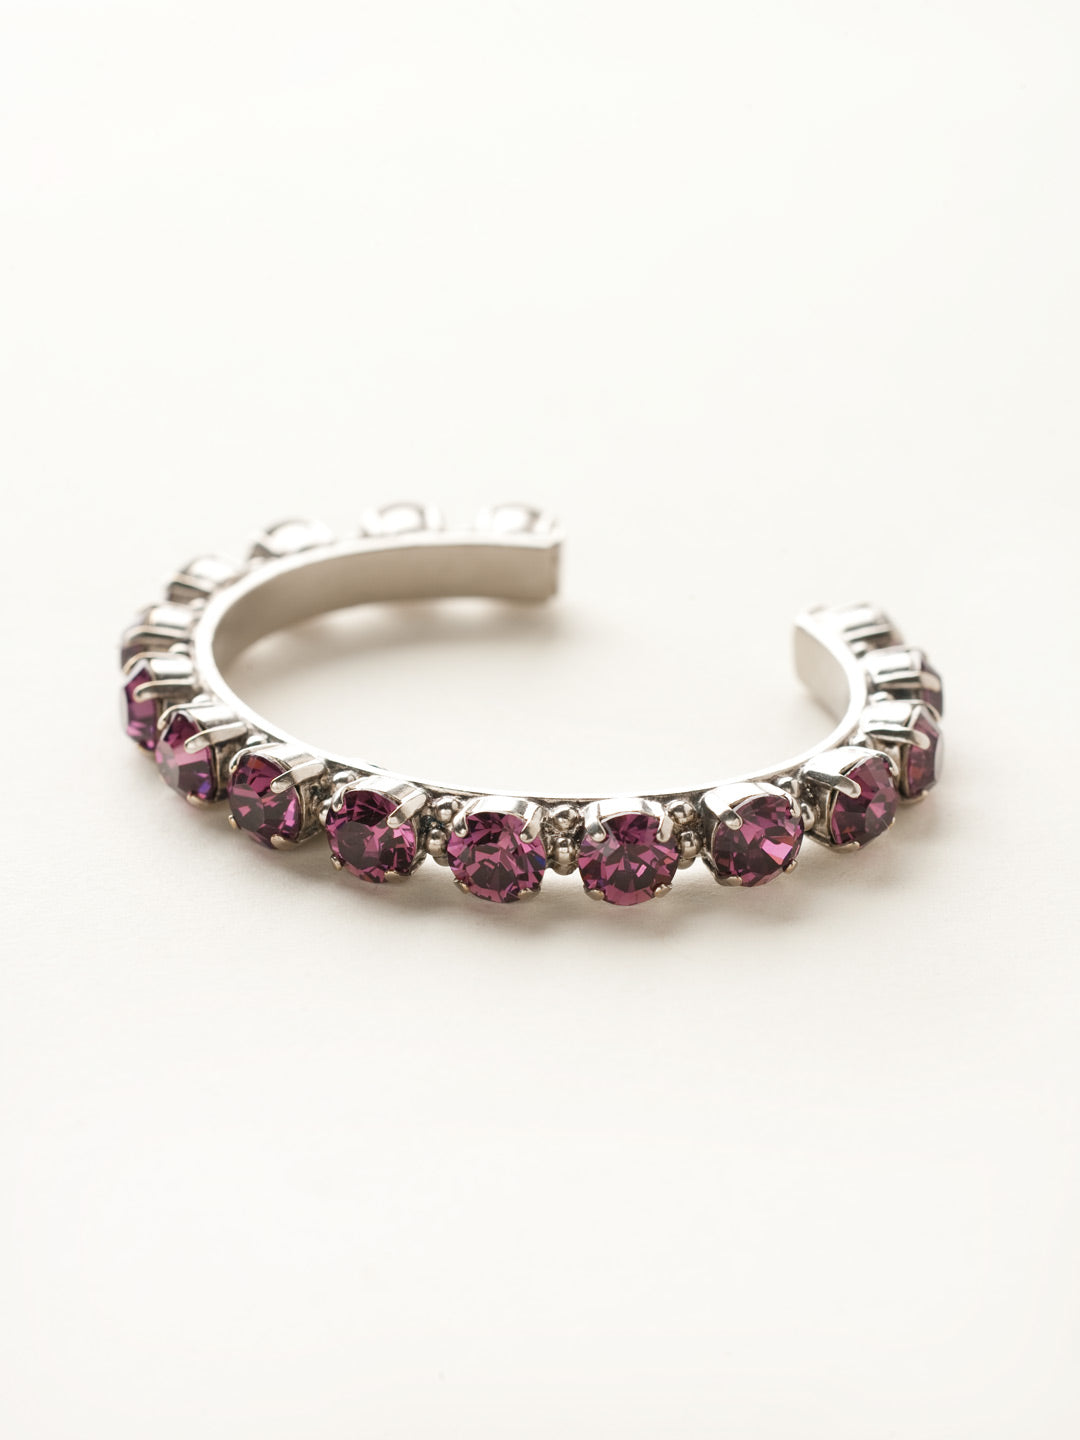 Product Image: Riveting Romance Cuff Bracelet